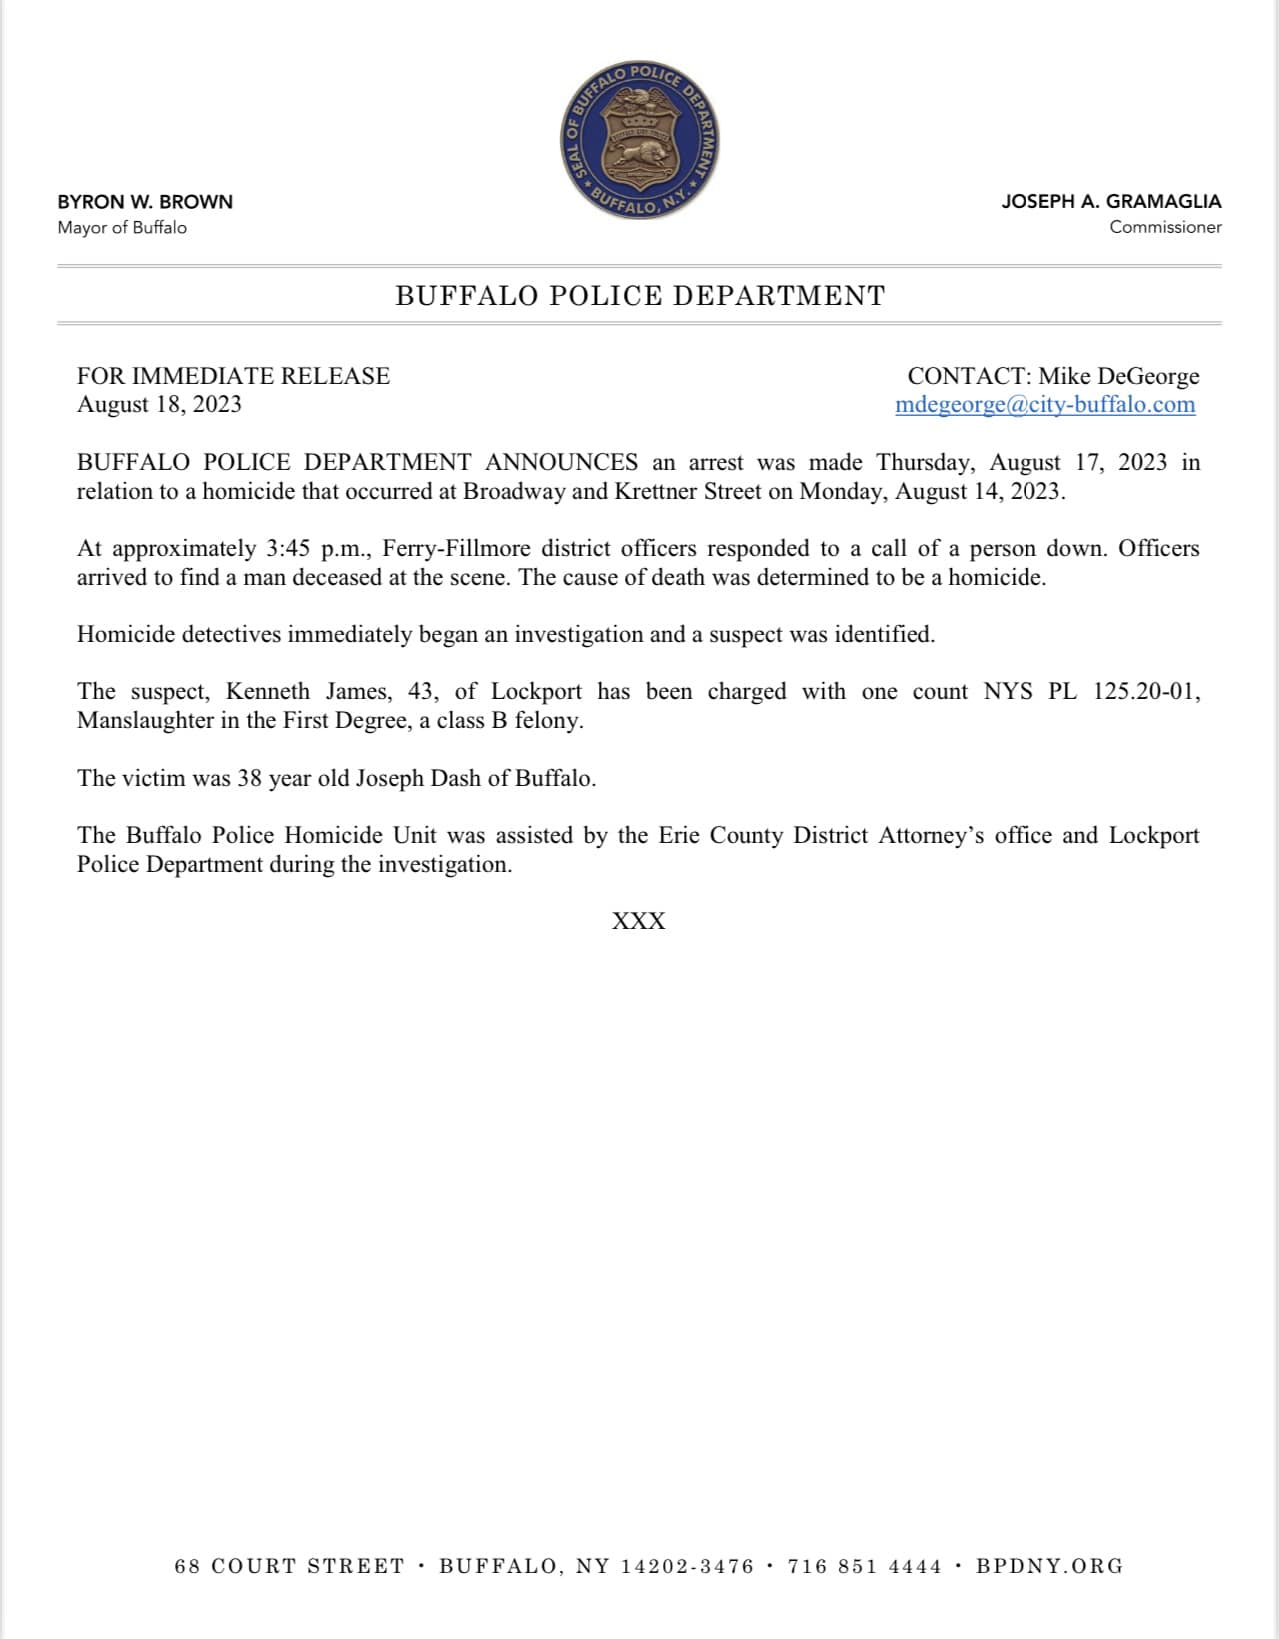 BPD release regarding Kenneth James arrest.